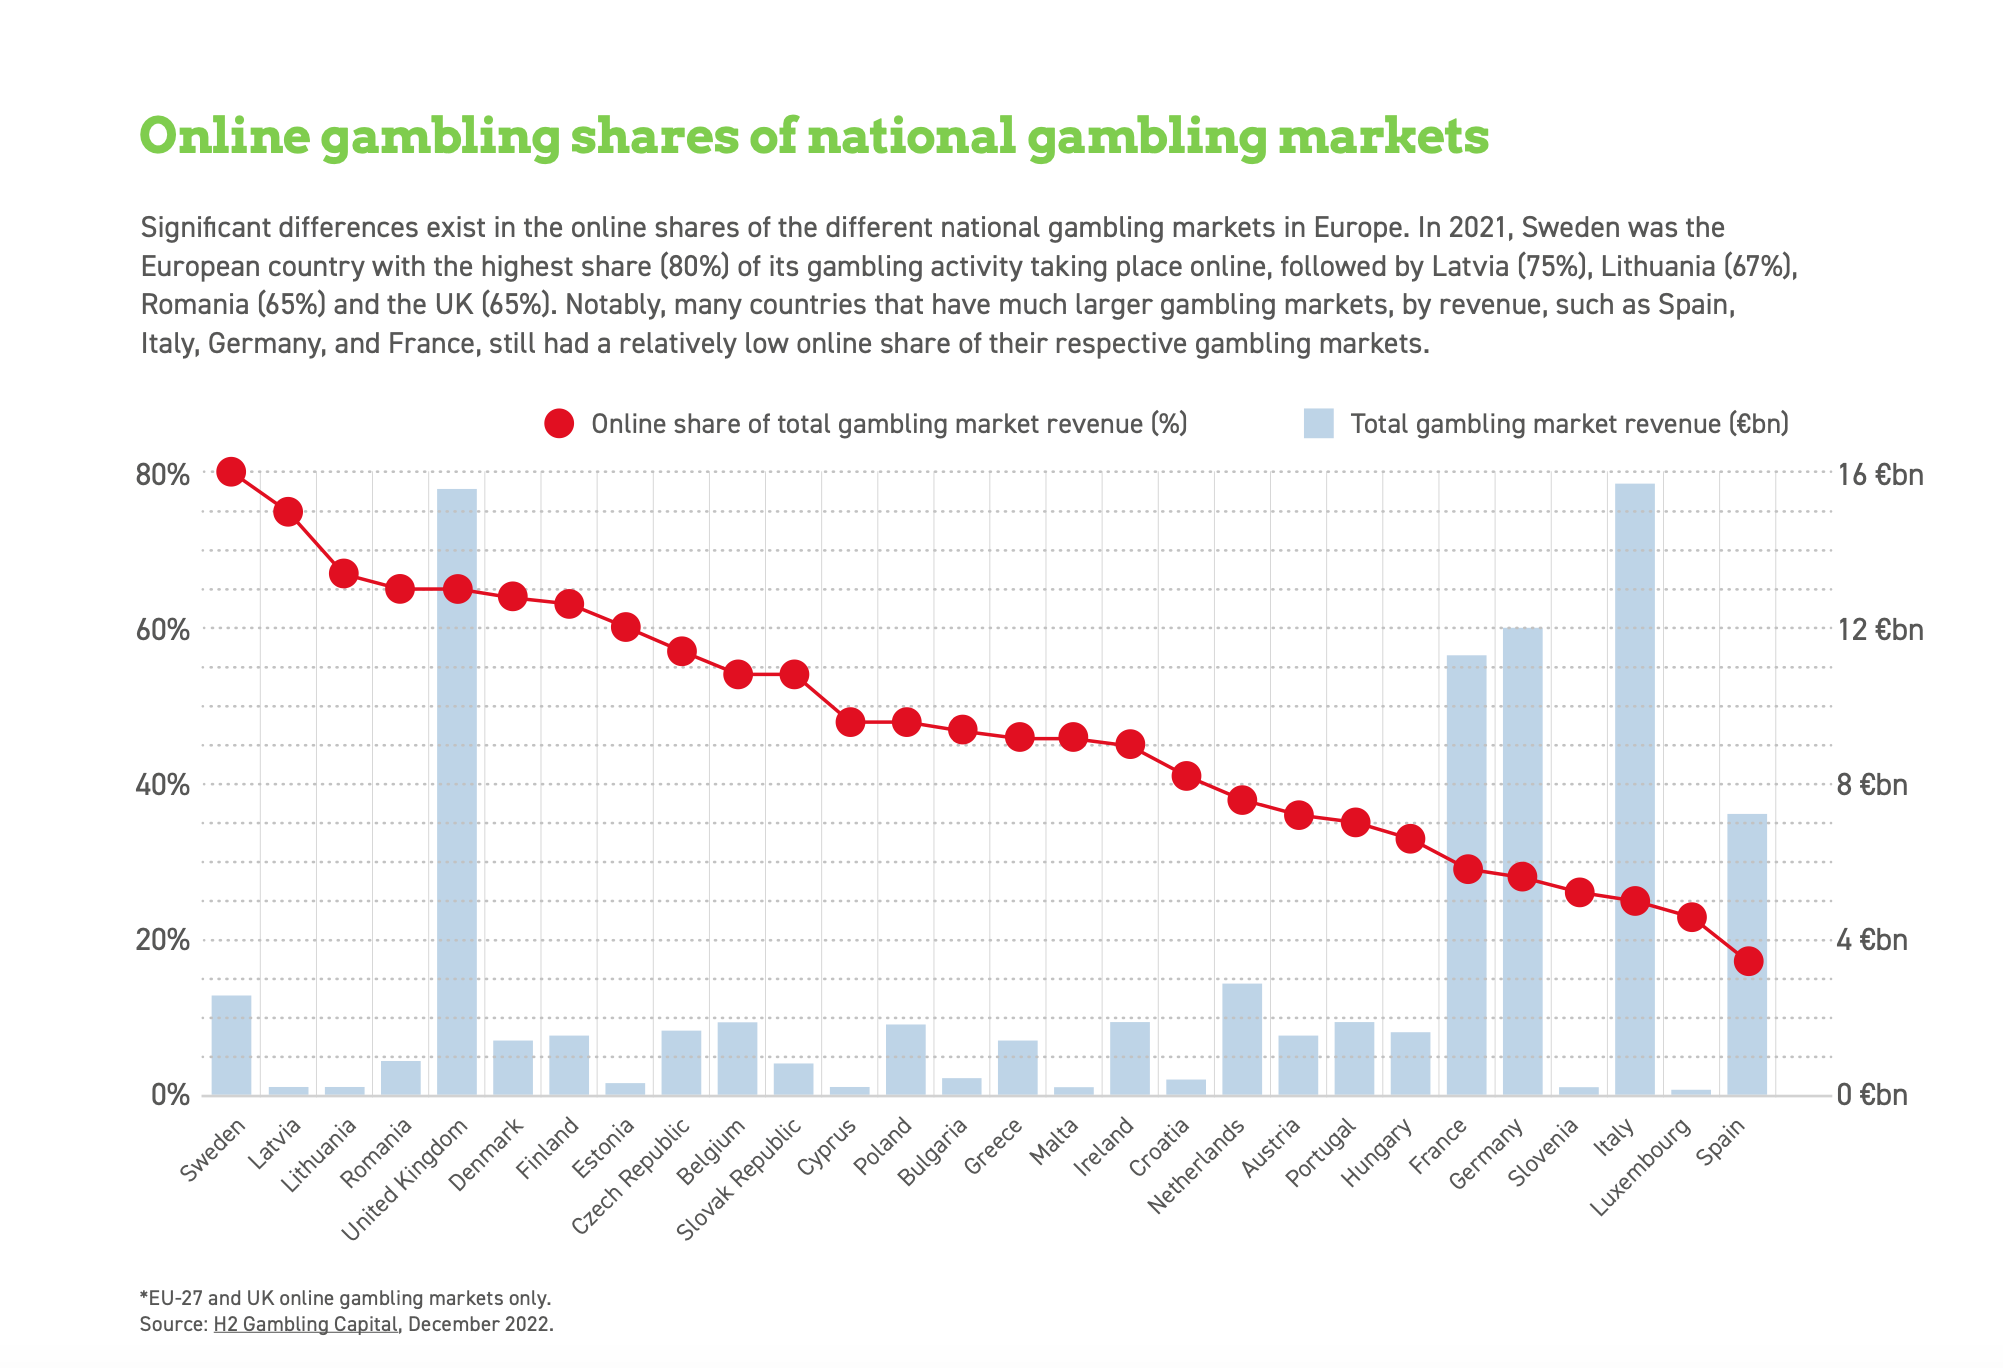 H2-Online-gambling-shares-of-national-gambling-markets-2